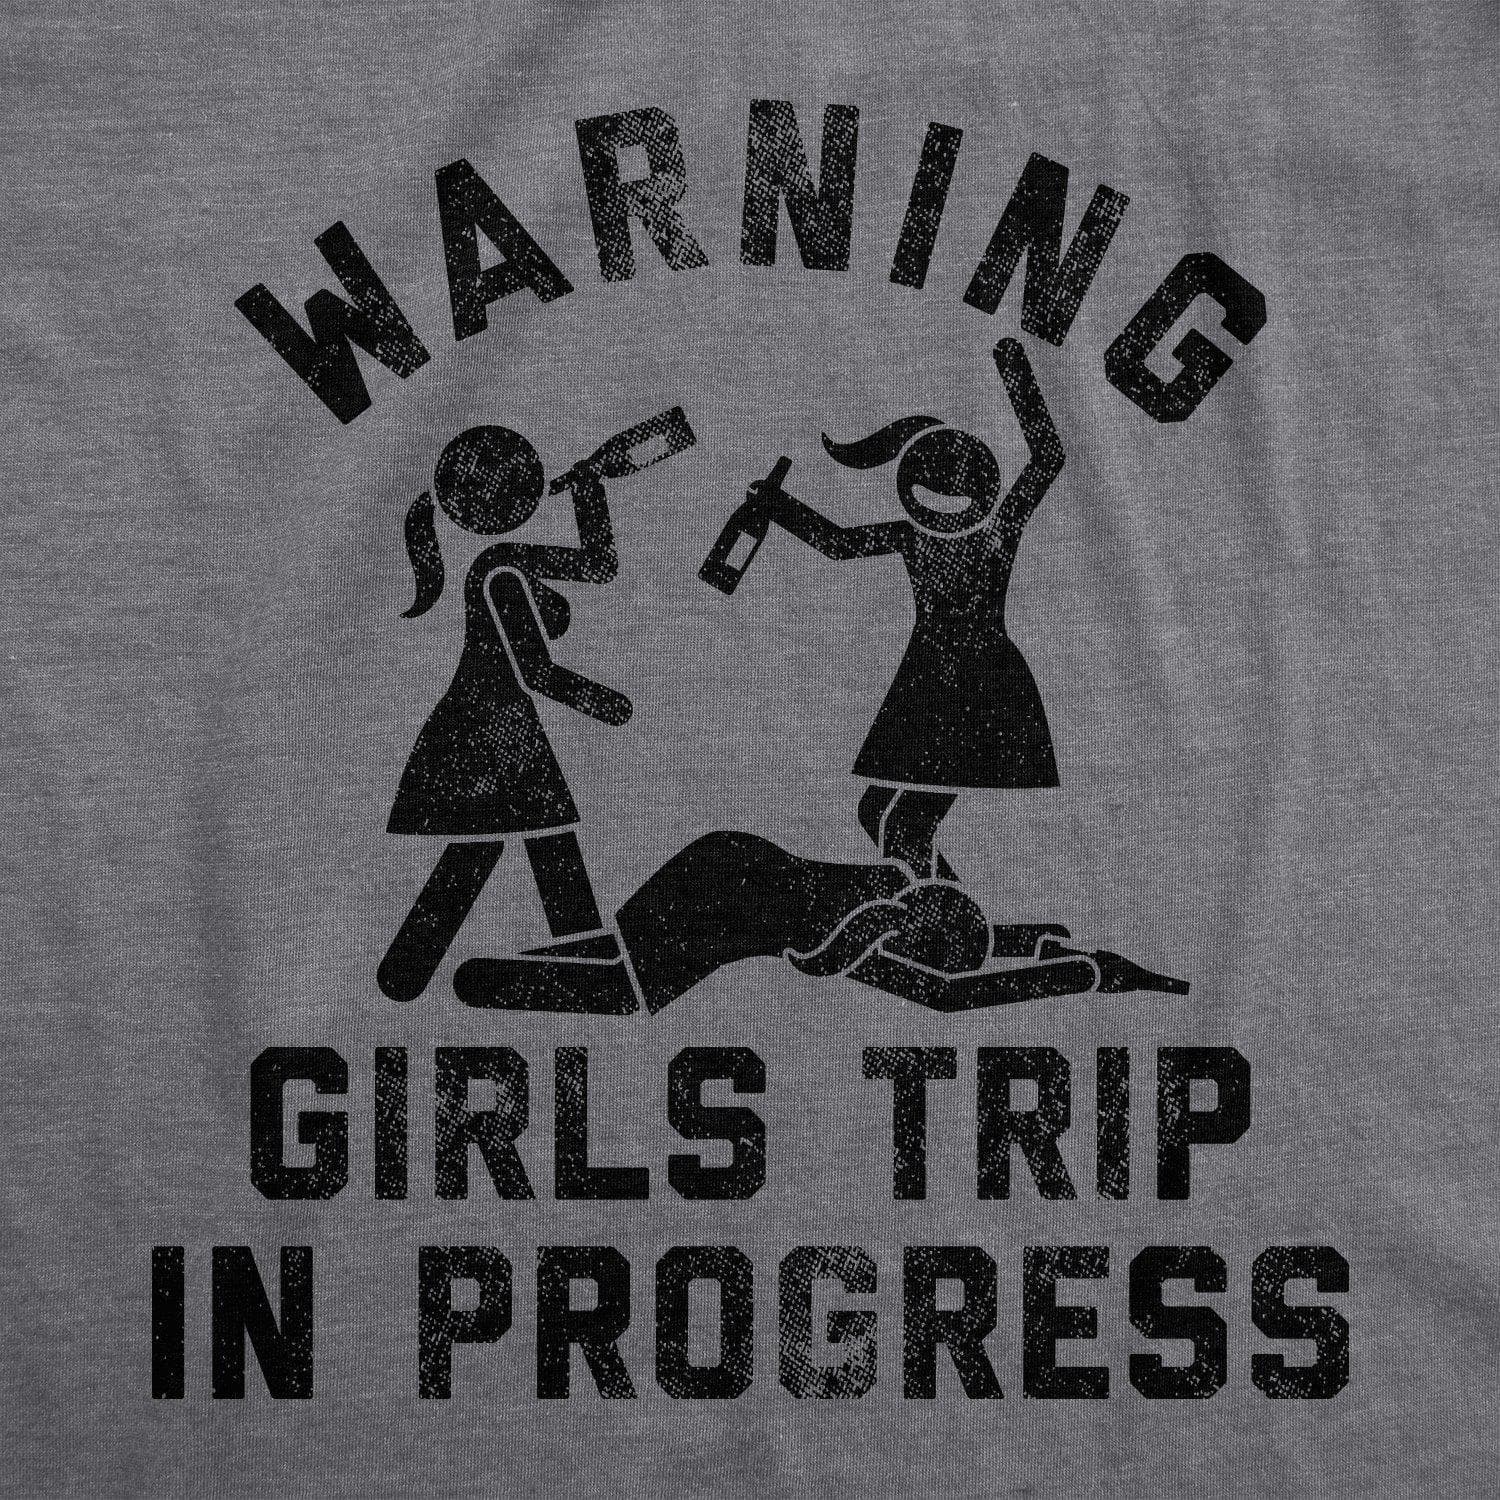 Warning Girls Trip In Progress Women's Tshirt - Crazy Dog T-Shirts